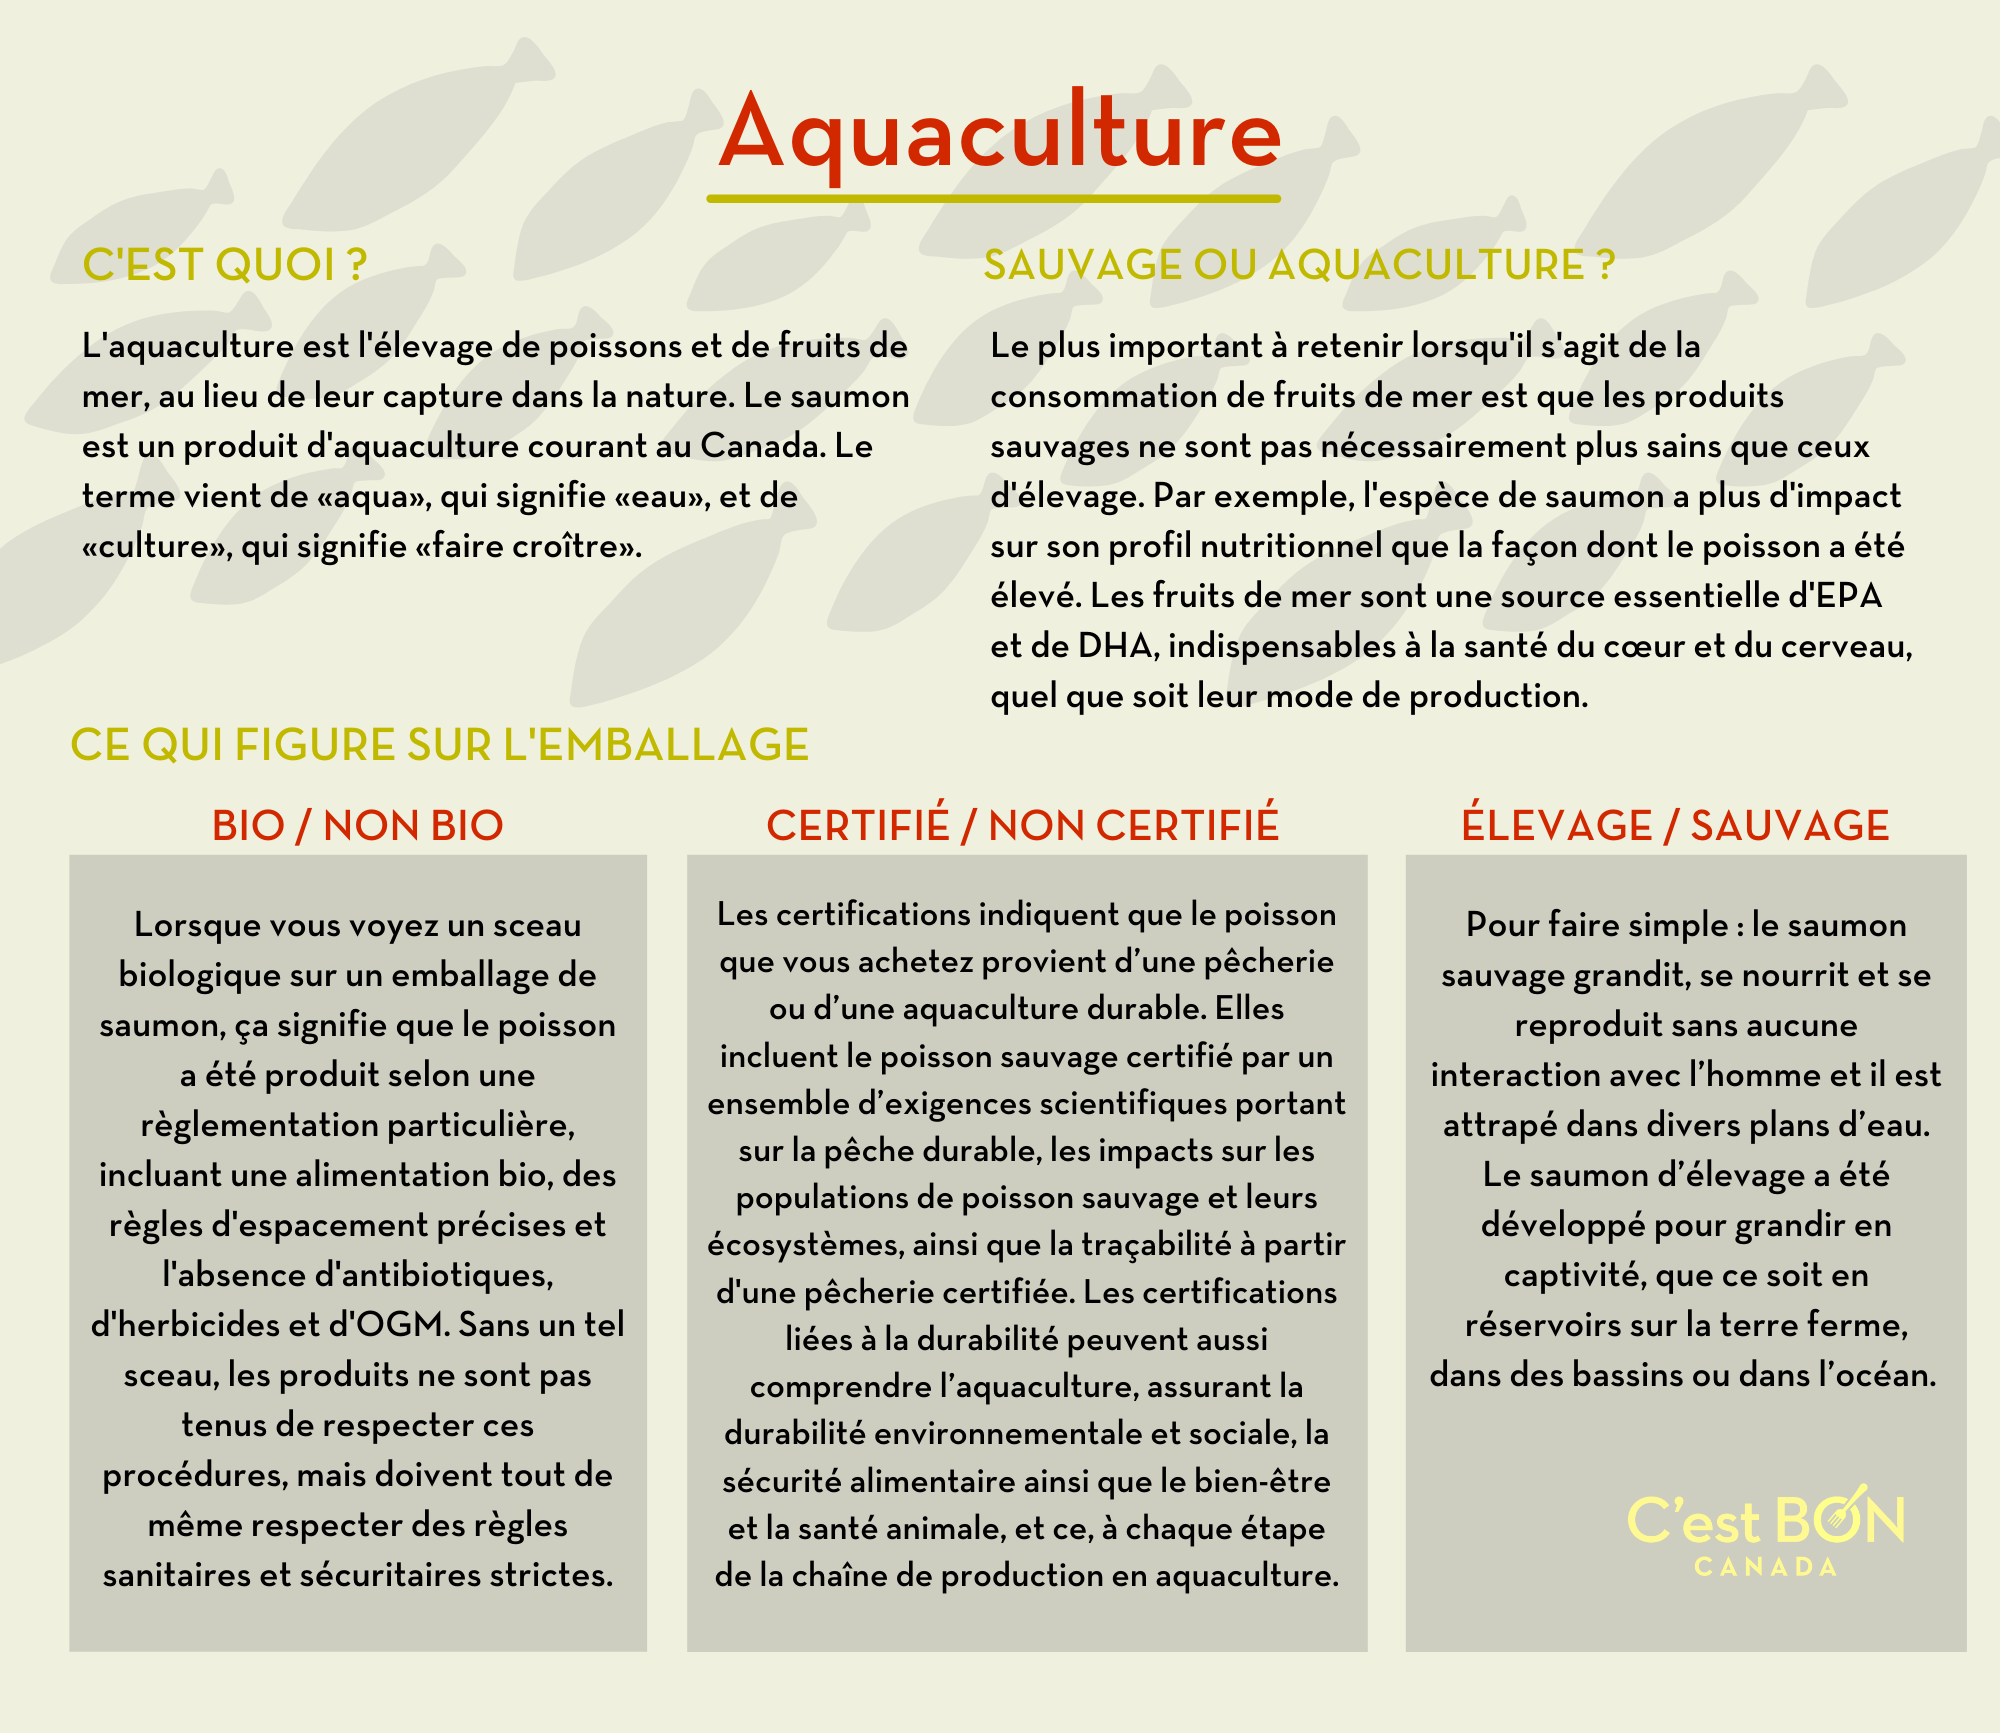 FRE Aquaculture Infographic